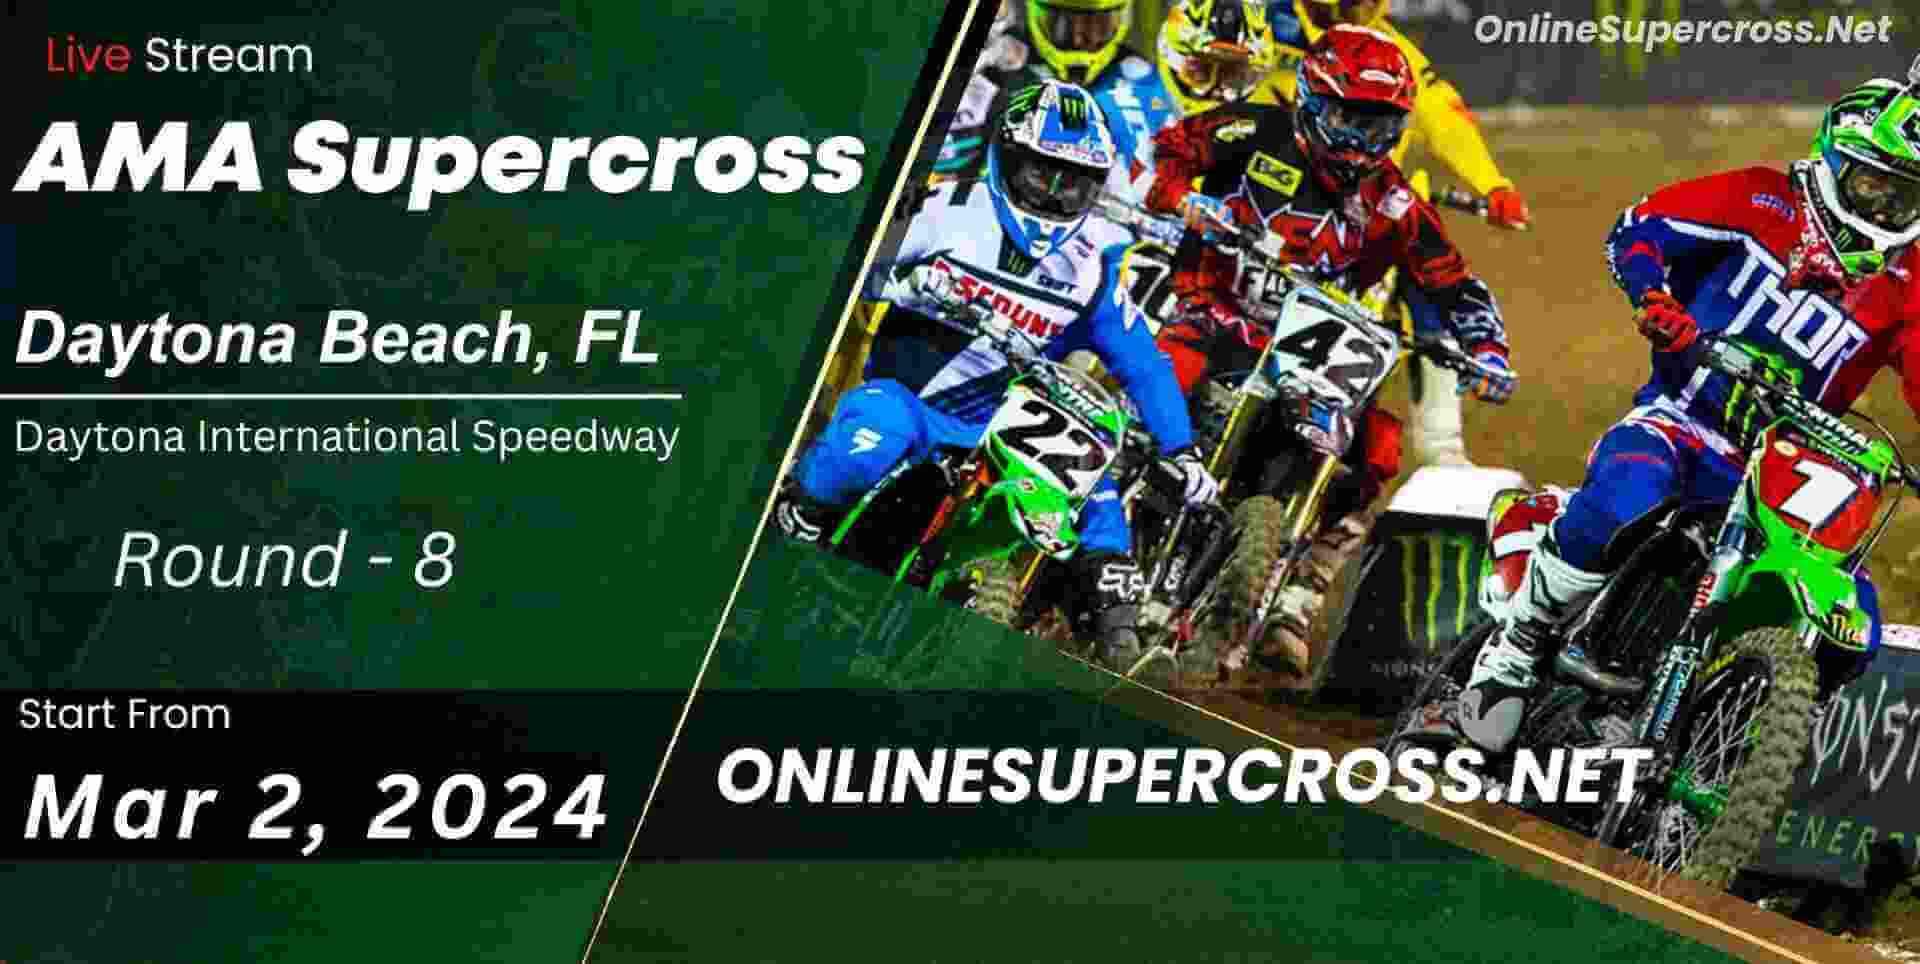 Watch 2015 AMA Supercross Daytona Online